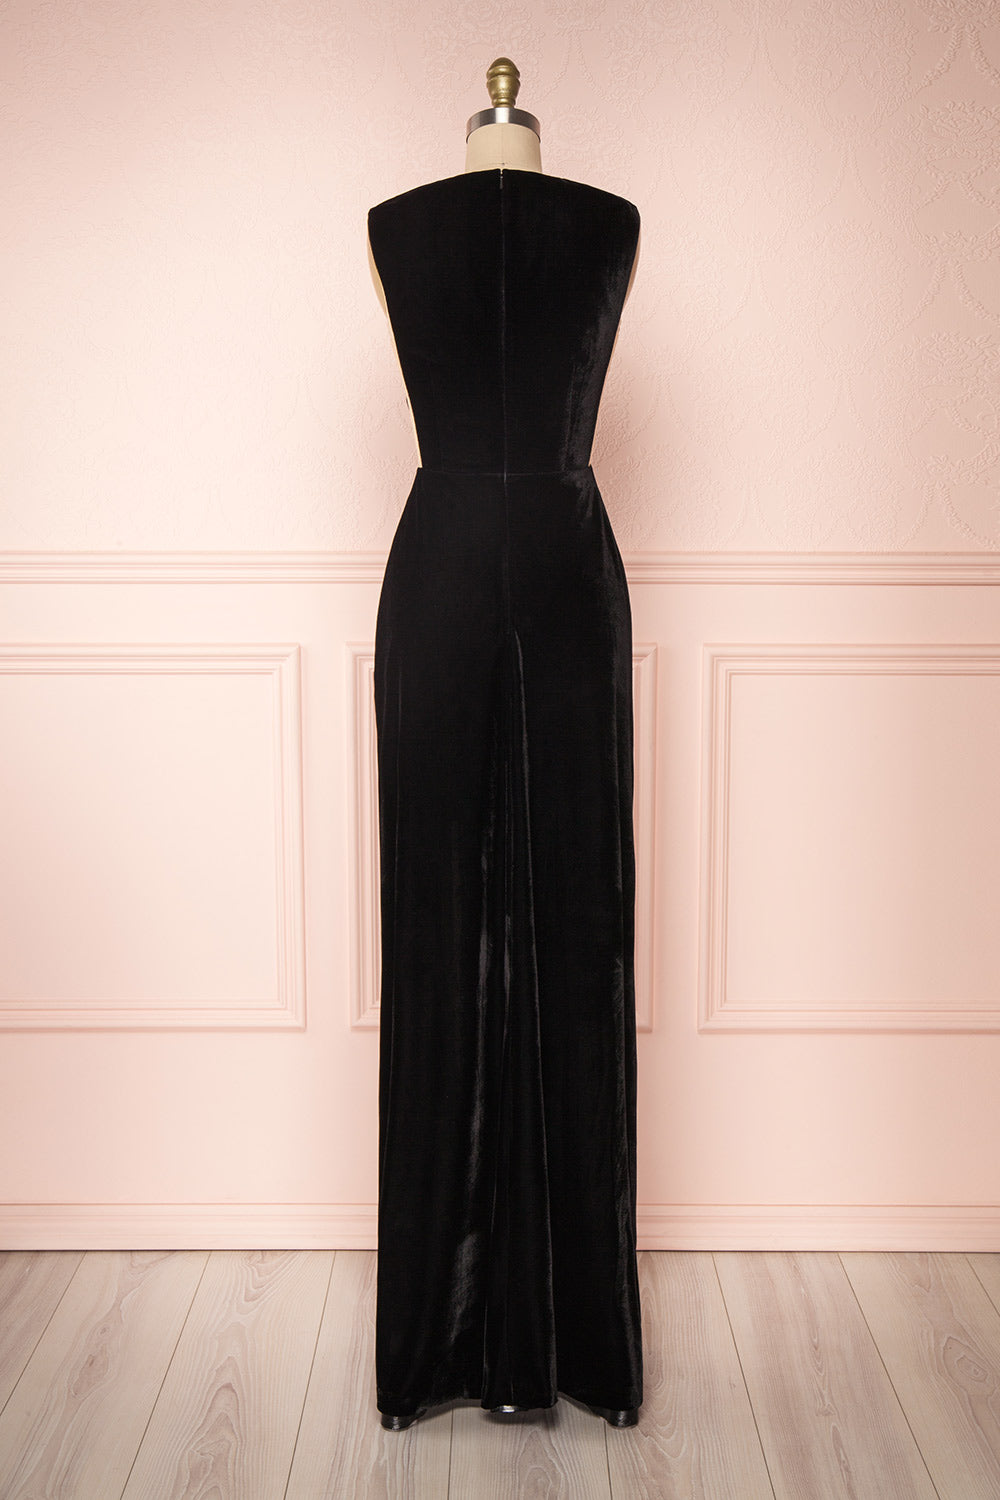 Eileen Black Velvet A-Line Gown | Boutique 1861 back view 